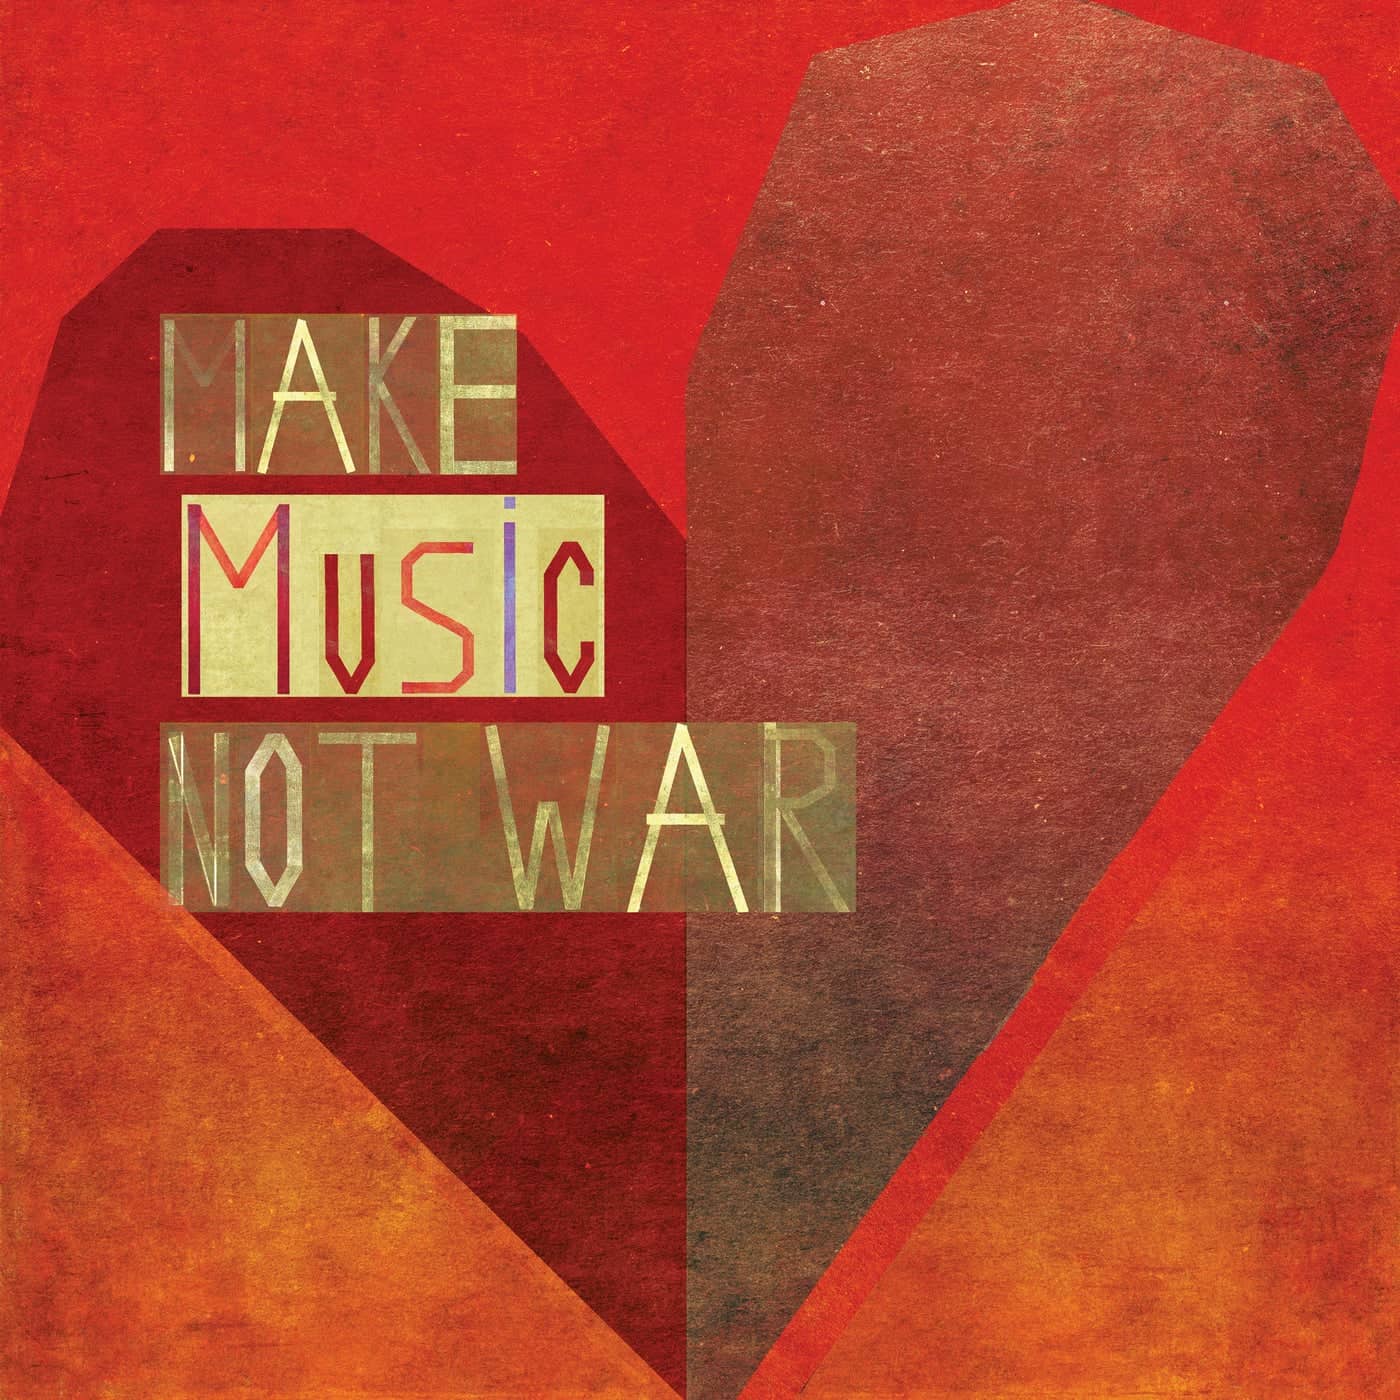 Download VA - Make Music Not War on Electrobuzz